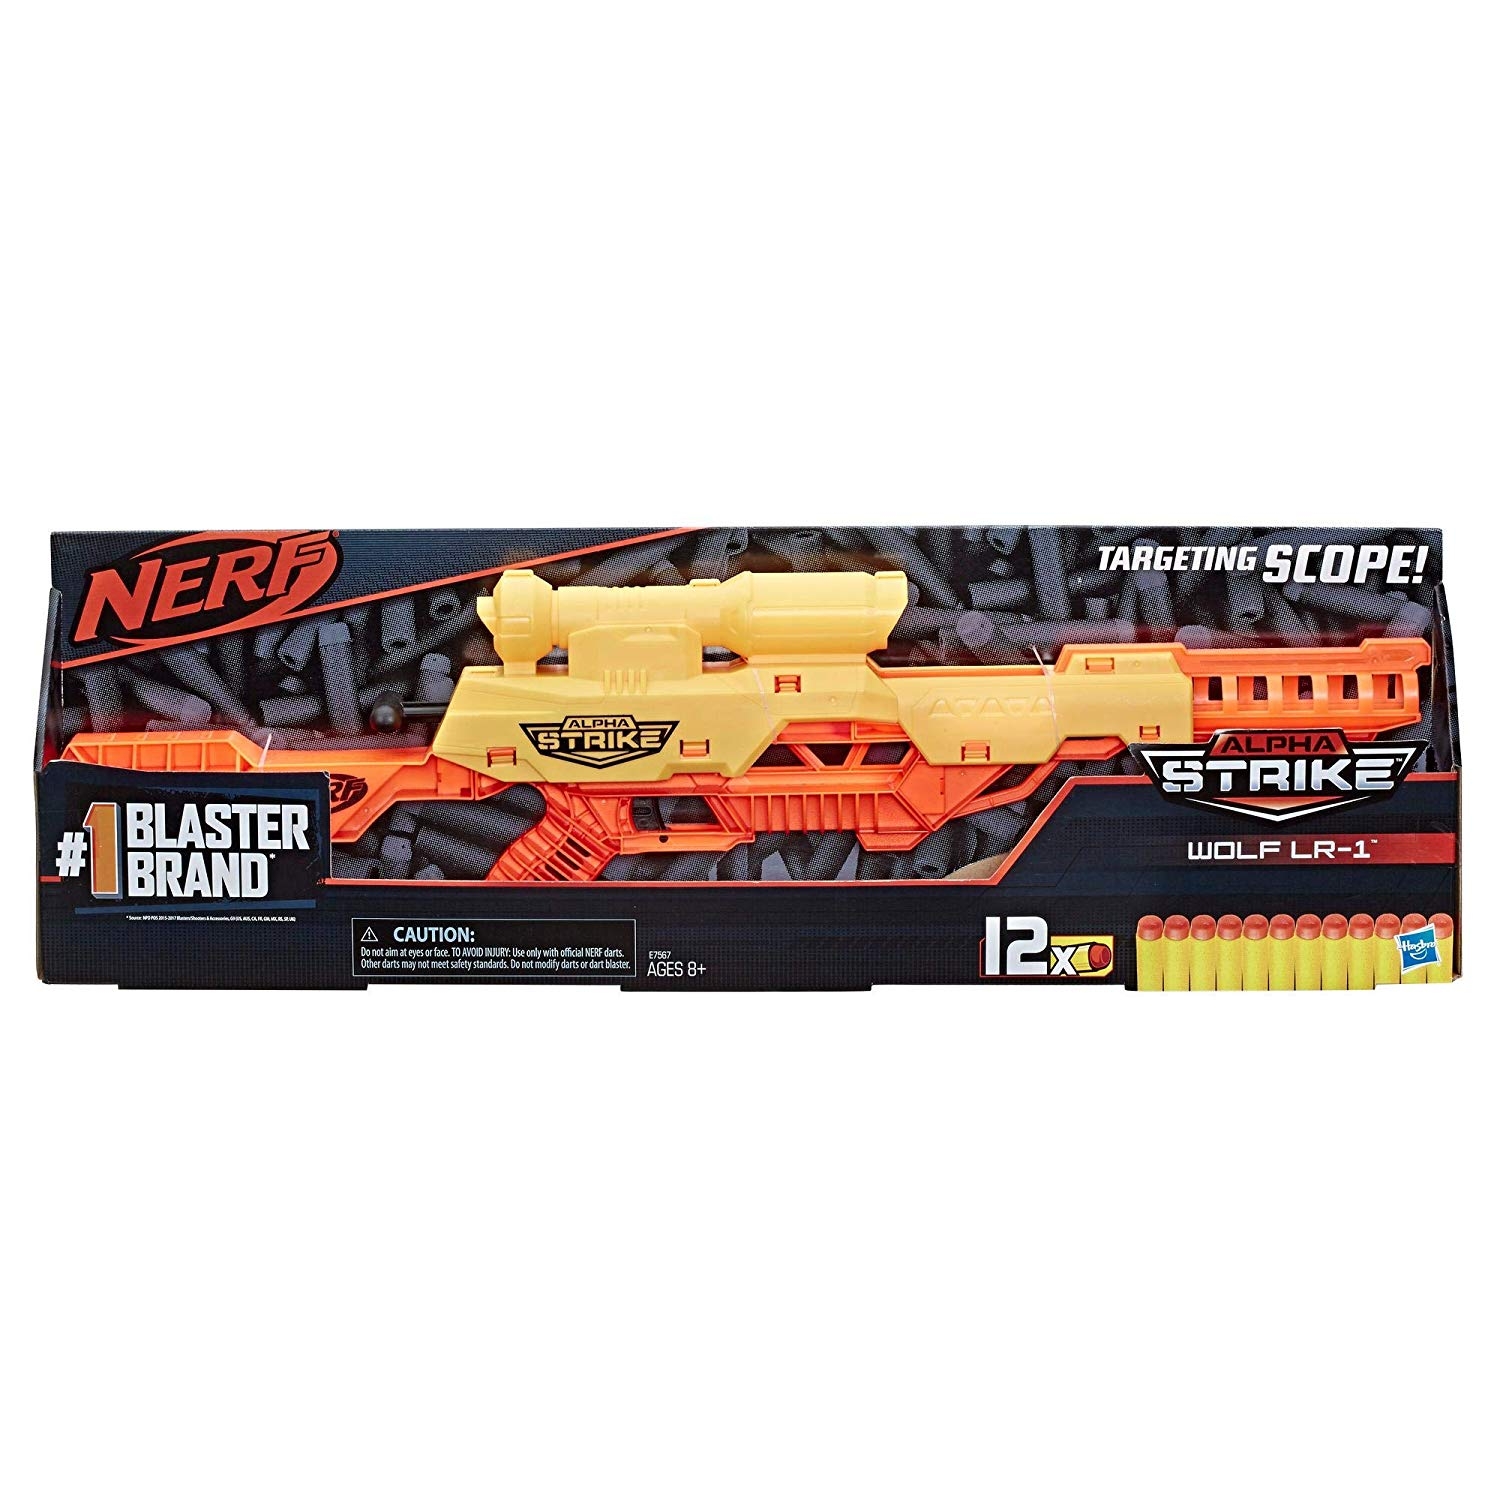 Nerf Alpha Strike Wolf LR-1 Toy Blaster with Targeting Scope ảnh 2